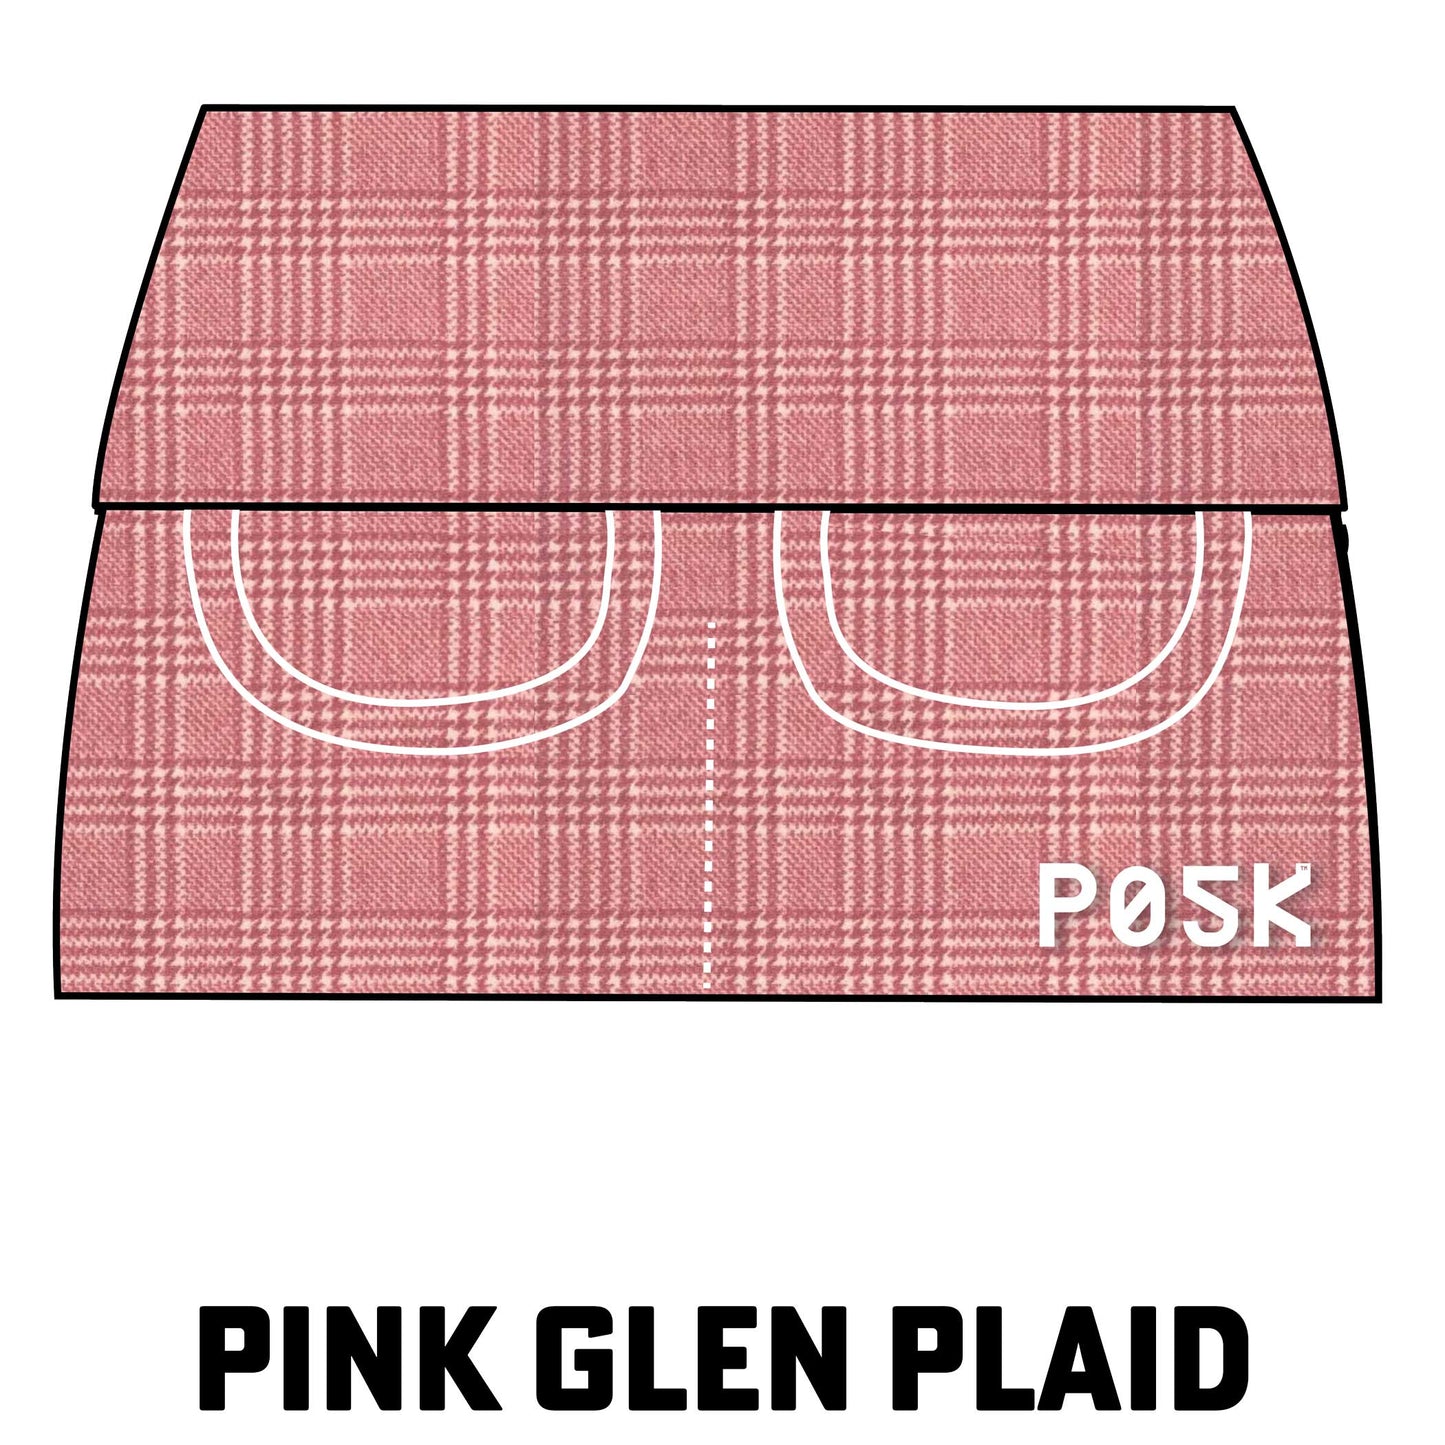 Pink Glen Plaid ErrandMate P05K™ Waist Apron PocketSkirt™-Waist Apron-XS-Pink Glen Plaid-Hagsters